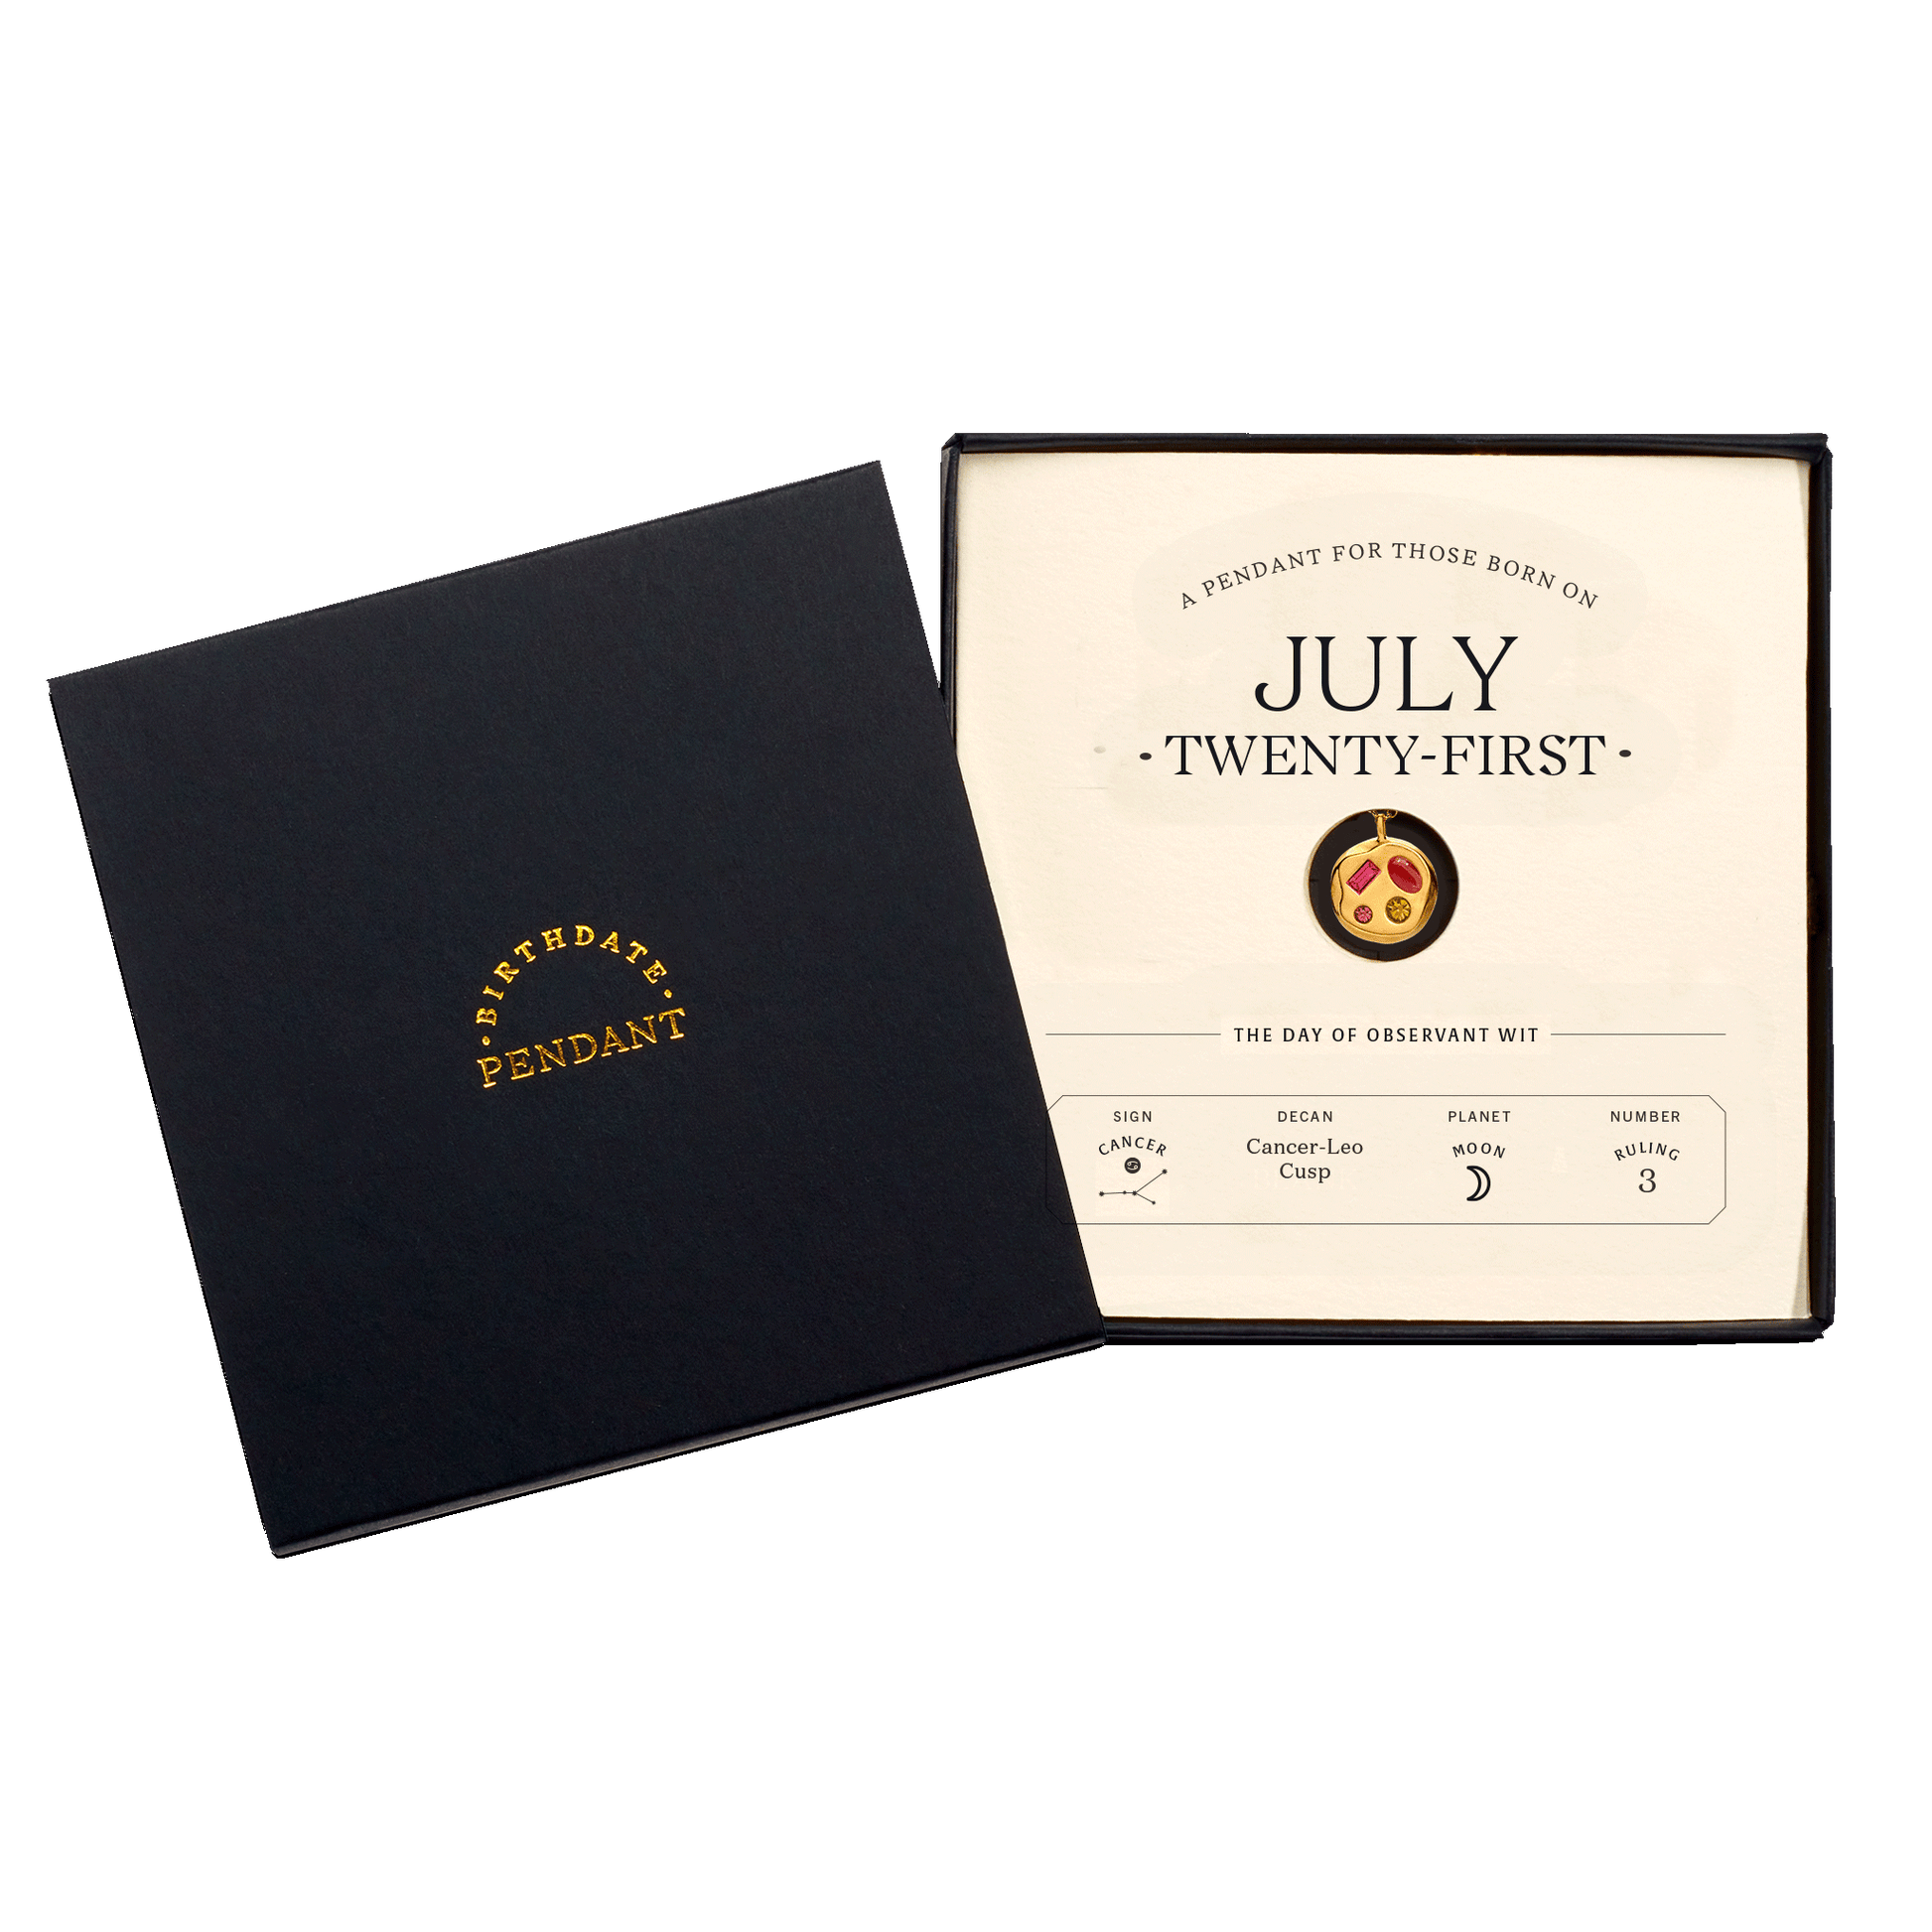 The July Twenty-First Pendant inside its box